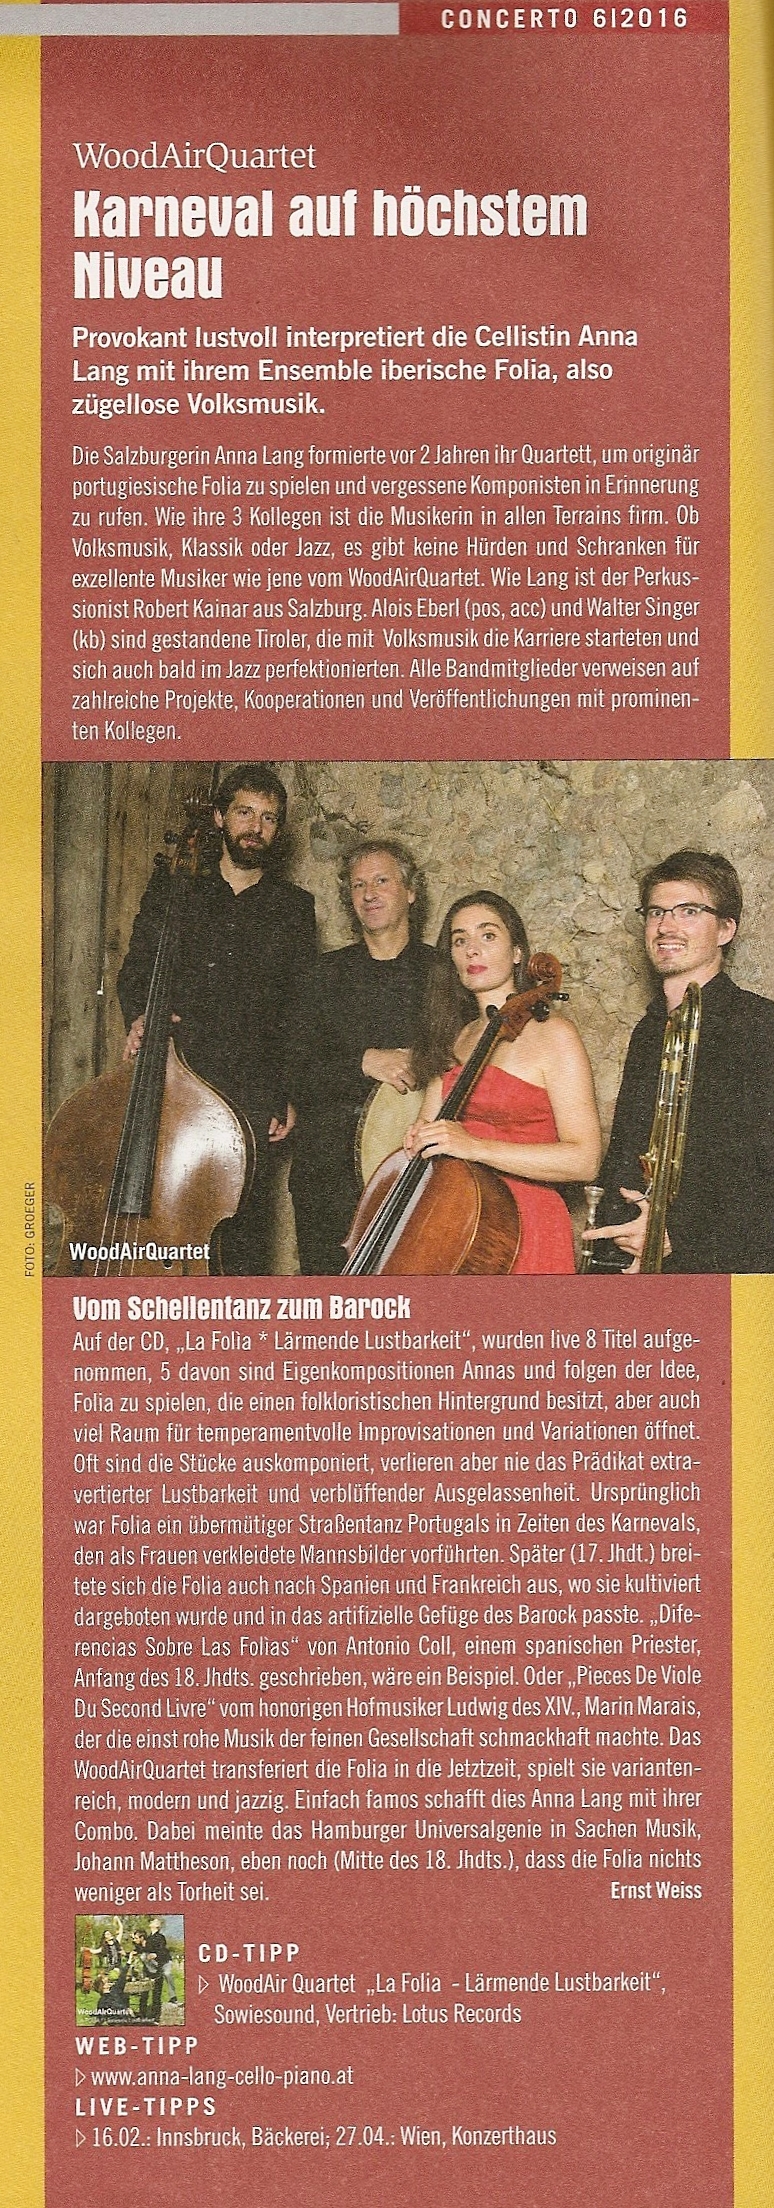 Concerto Magazin 201 Dezember1